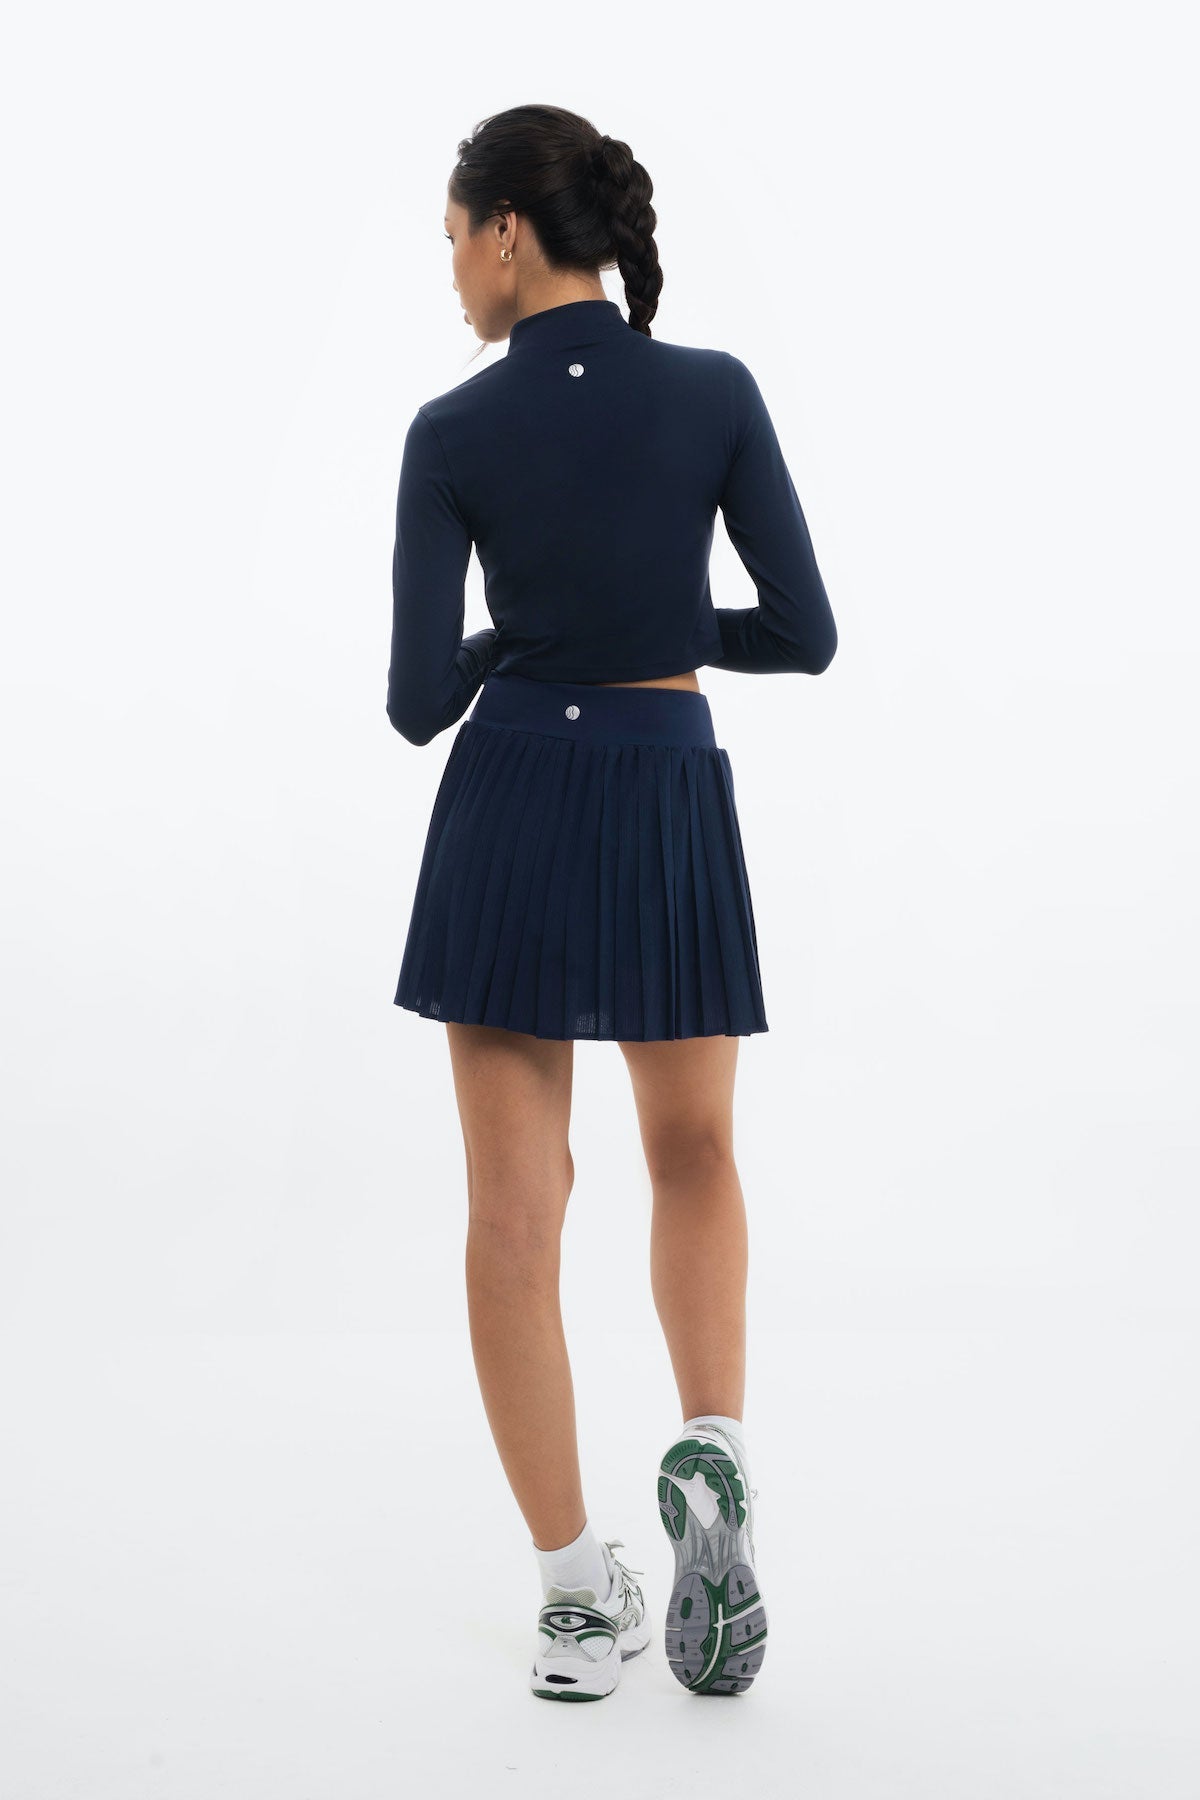 Flow Tennis Skirt in Navy (Bestseller)